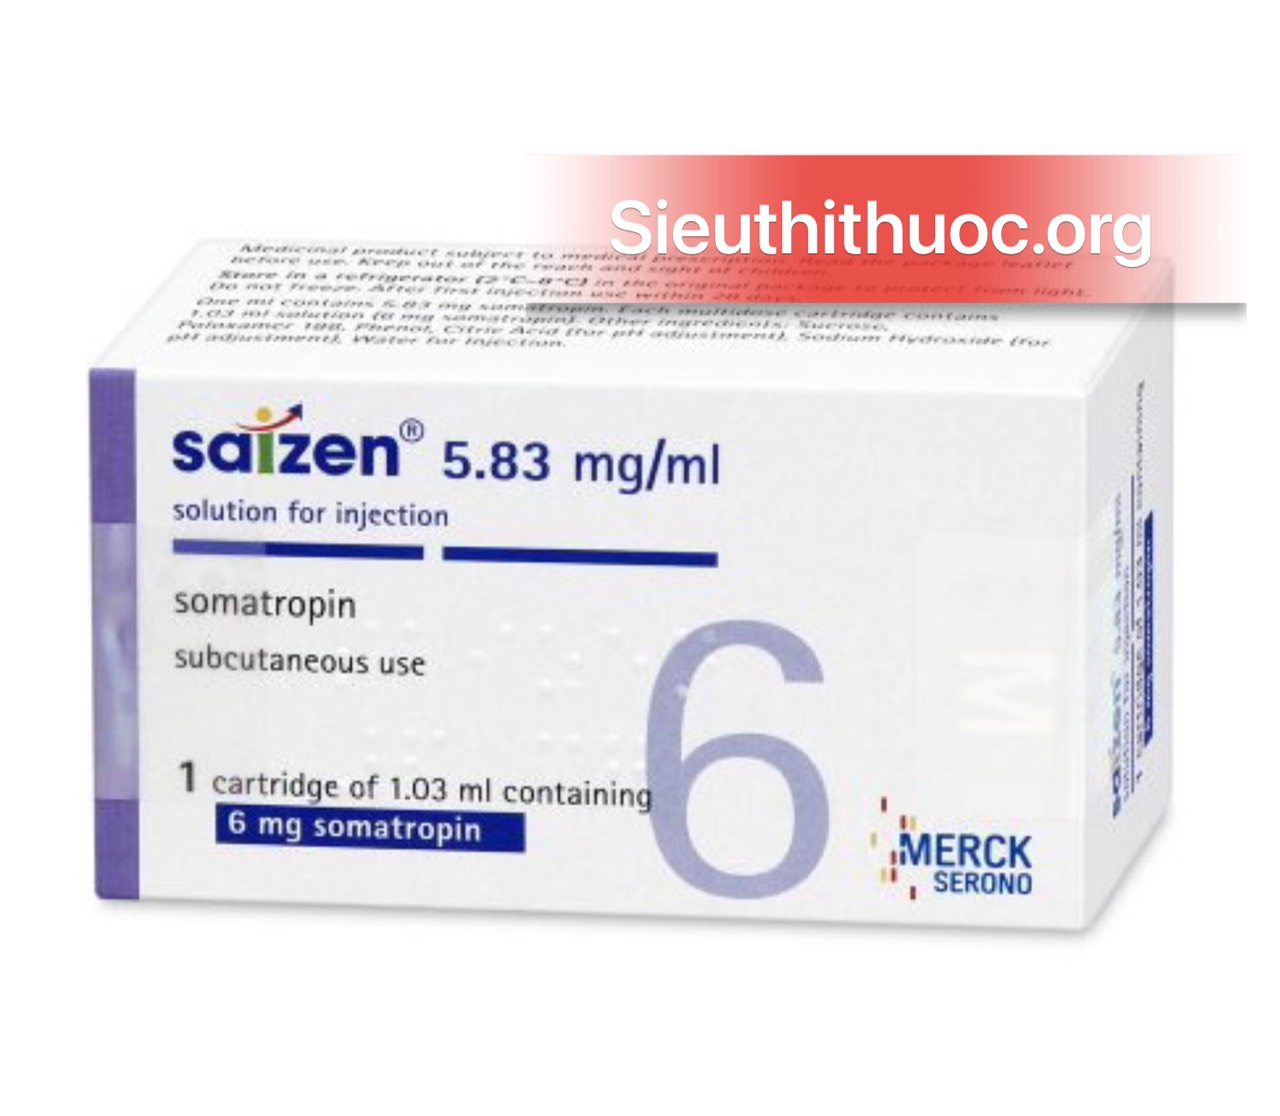 saizen-liquid-6mg-1-03ml-hormone-tang-truong-somatropin-hang-merck-serono